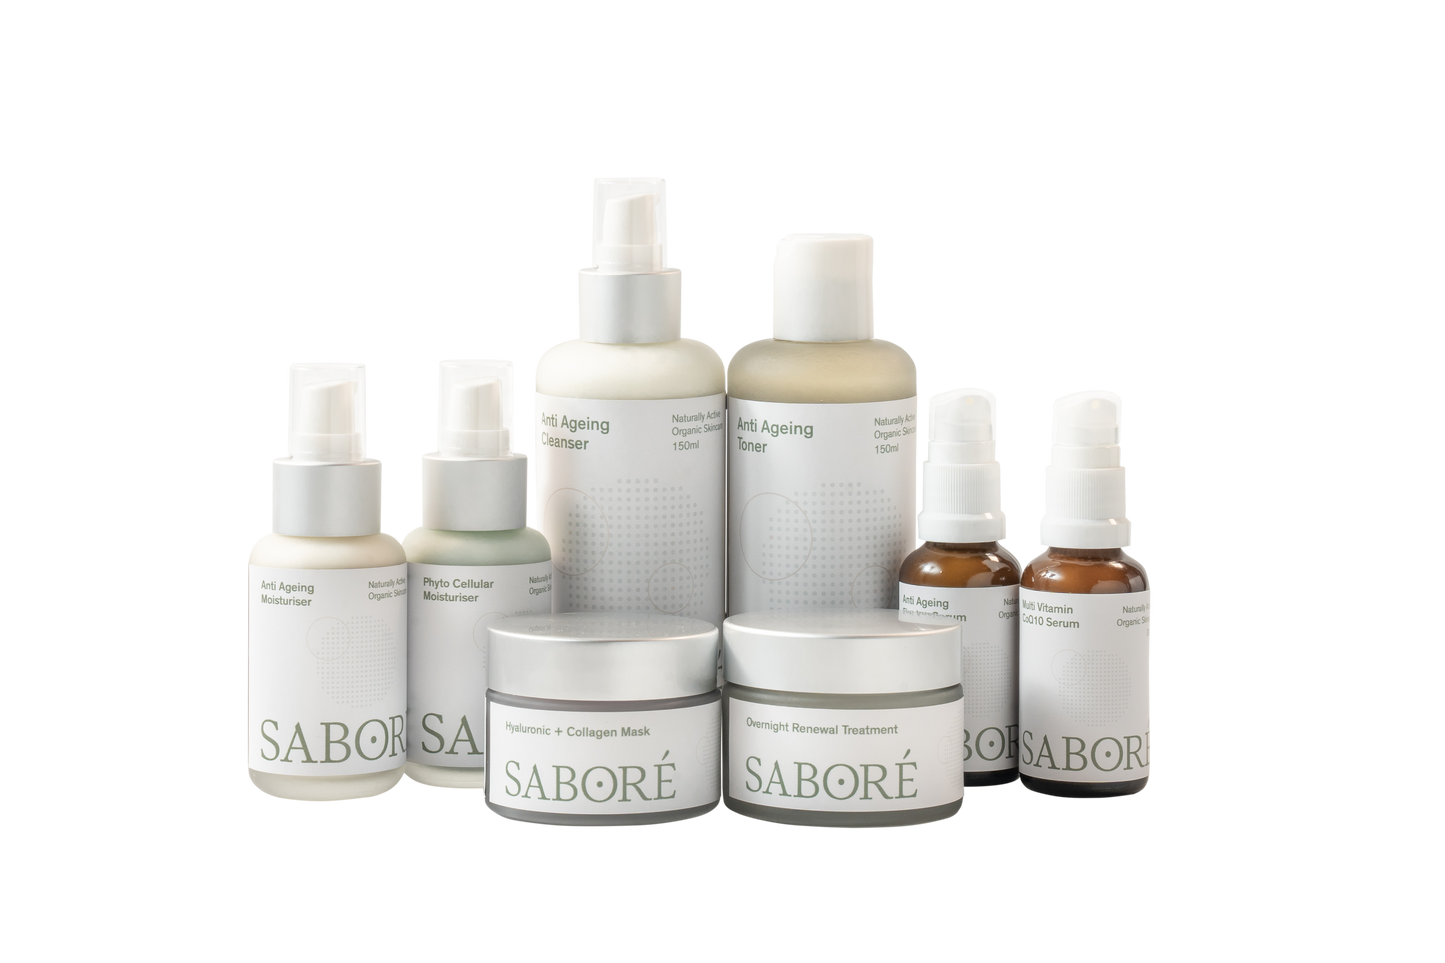 Sabore Anti Ageing Set (Dry)